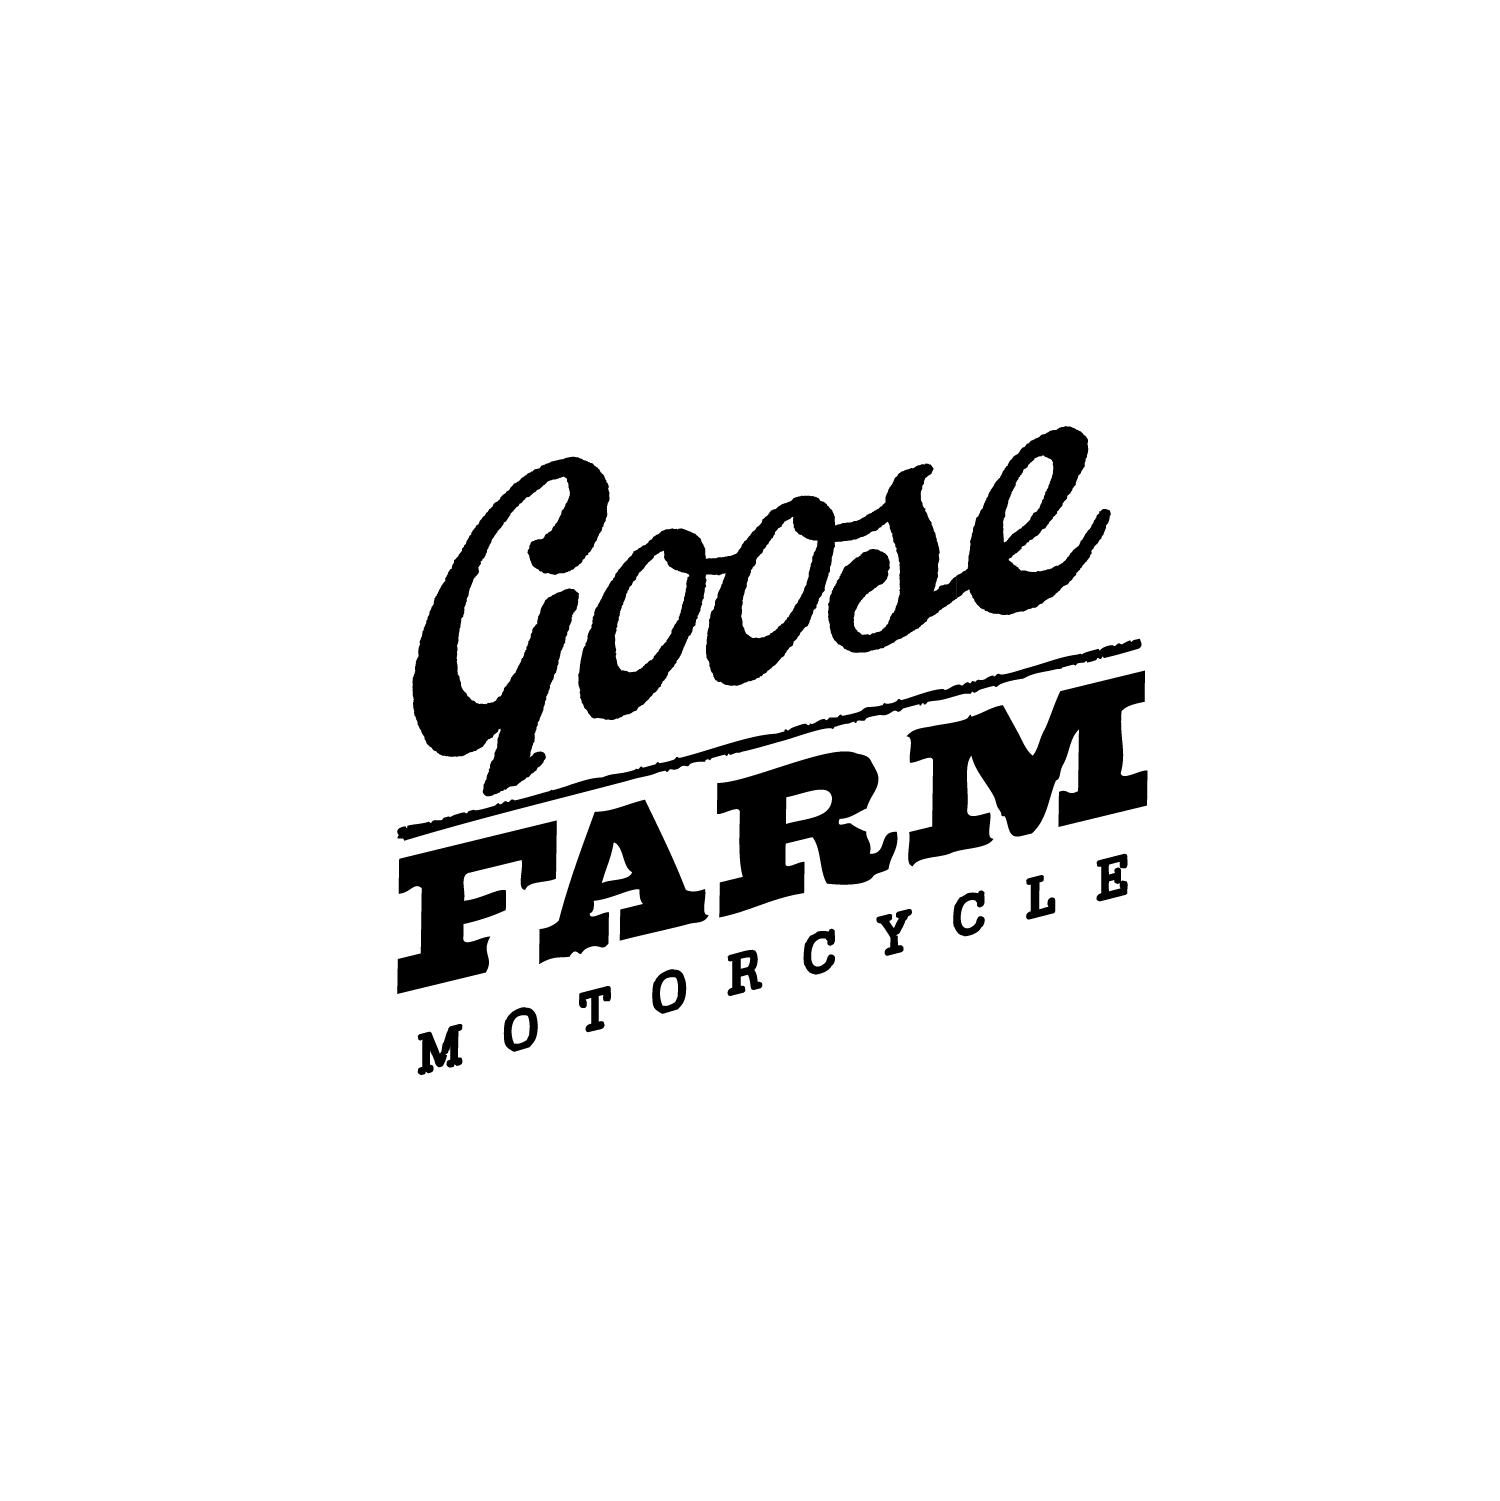 Goose Farm Motorcycle logo by OLSON MCINTYRE